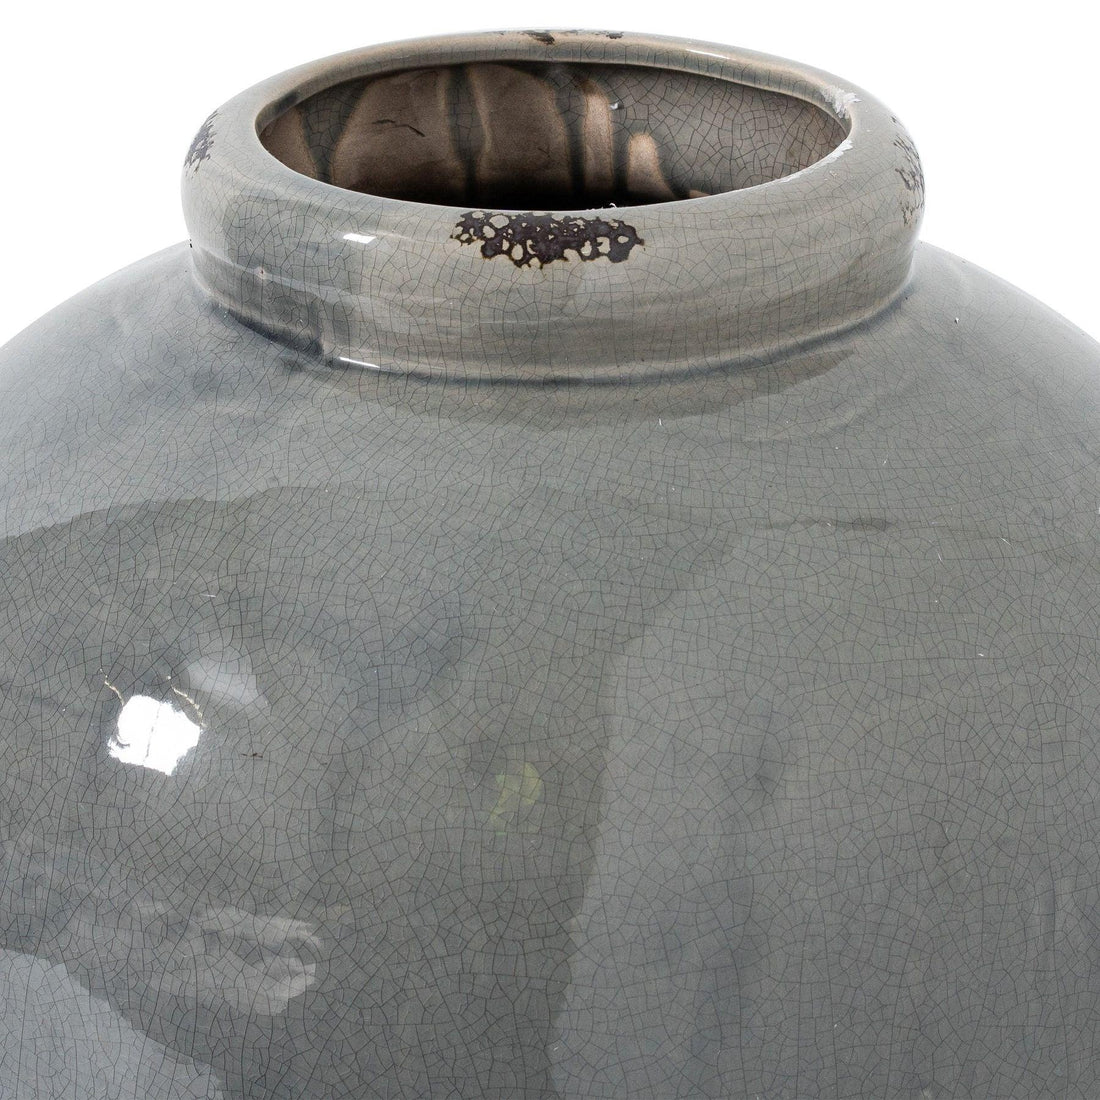 Garda Grey Glazed Tall Juniper Vase - £239.95 - Gifts & Accessories > Vases > Ornaments 